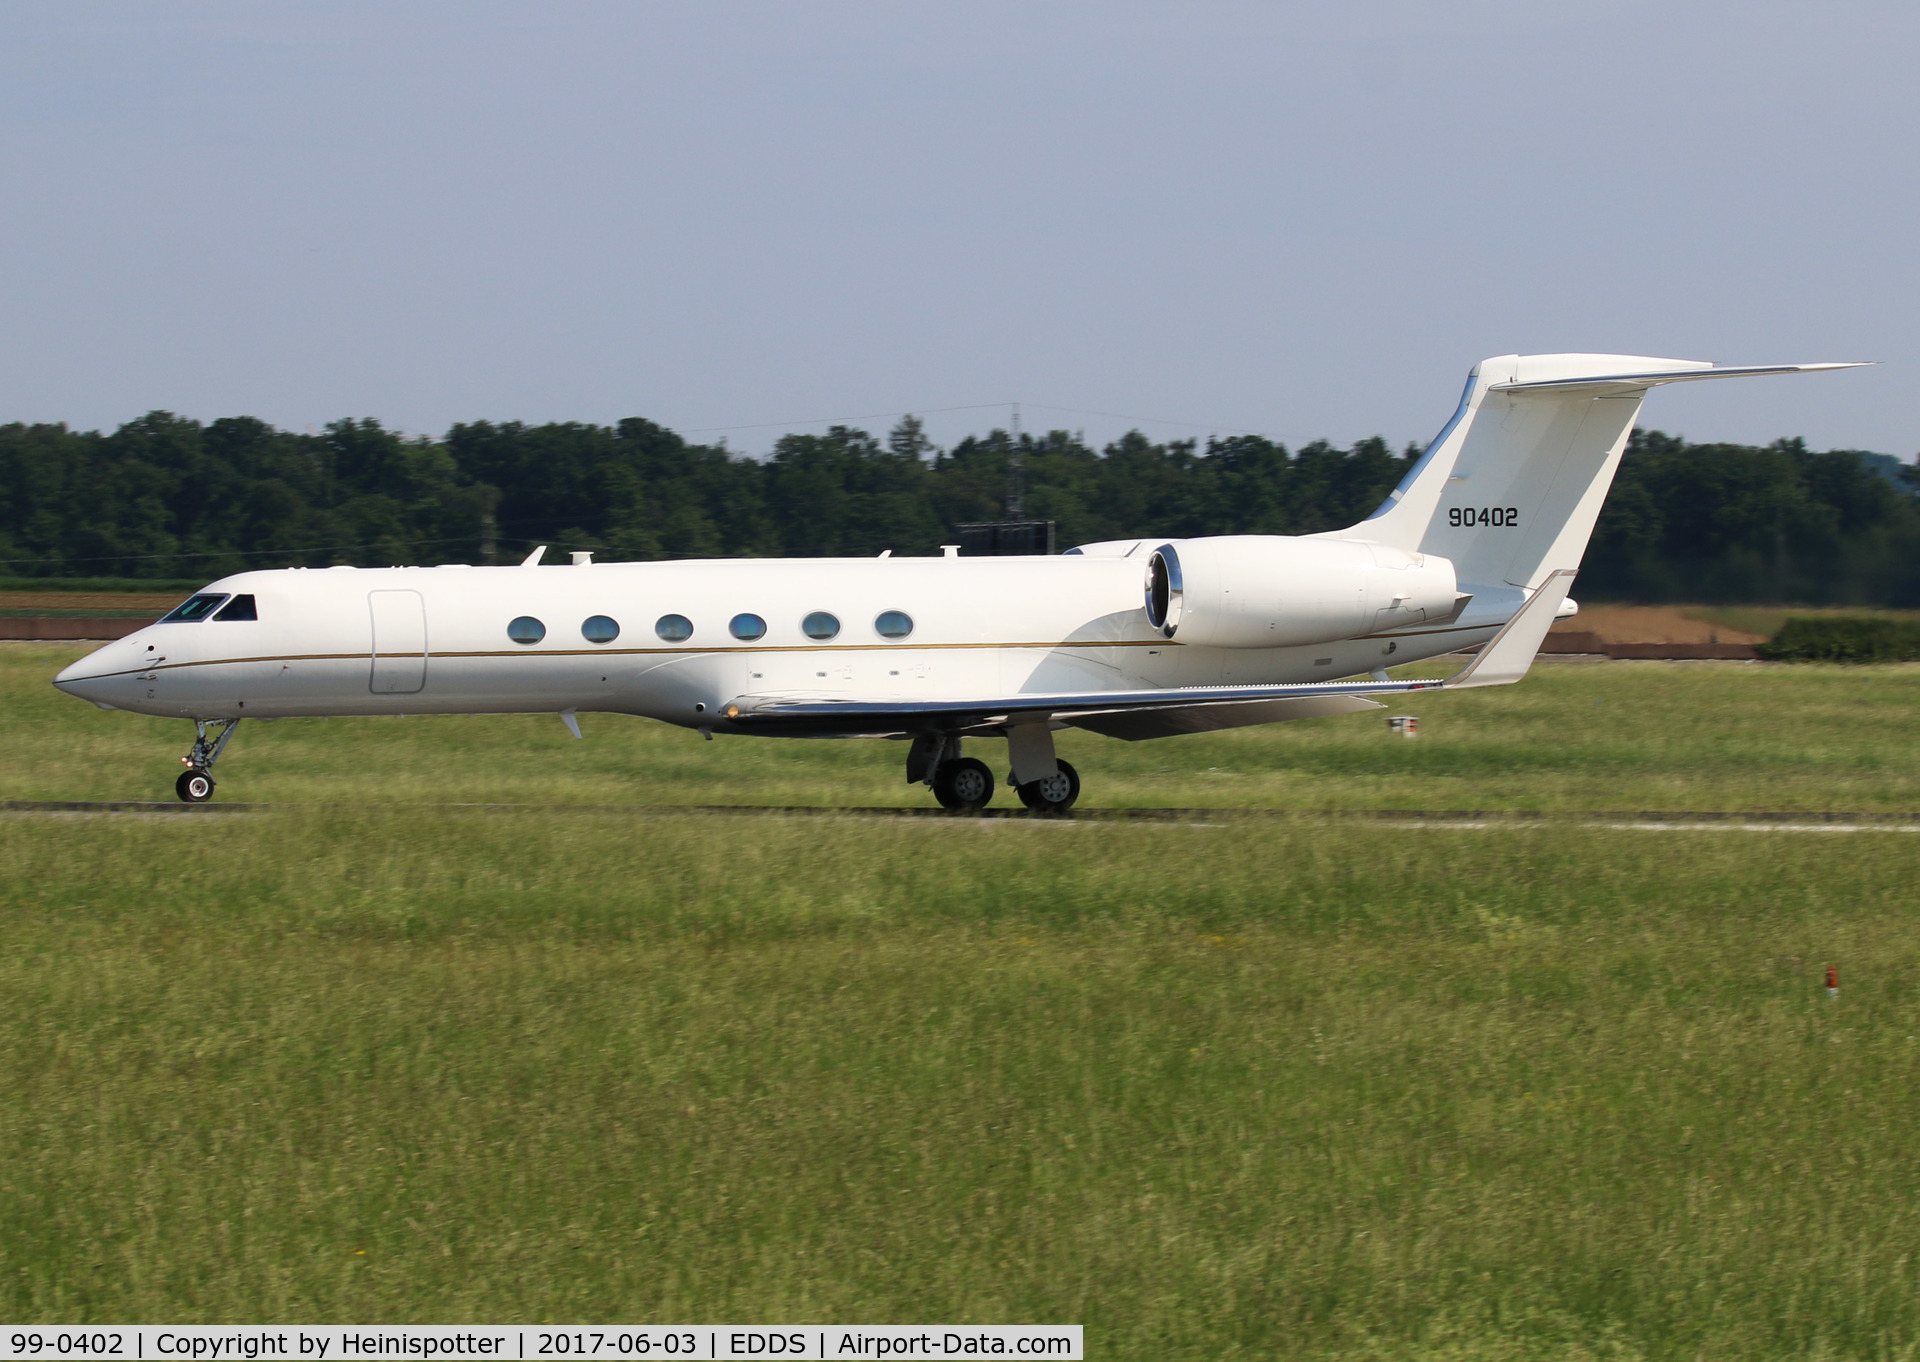 99-0402, 2000 Gulfstream Aerospace C-37A (Gulfstream V) C/N 571, 99-0402 at Stuttgart Airport.